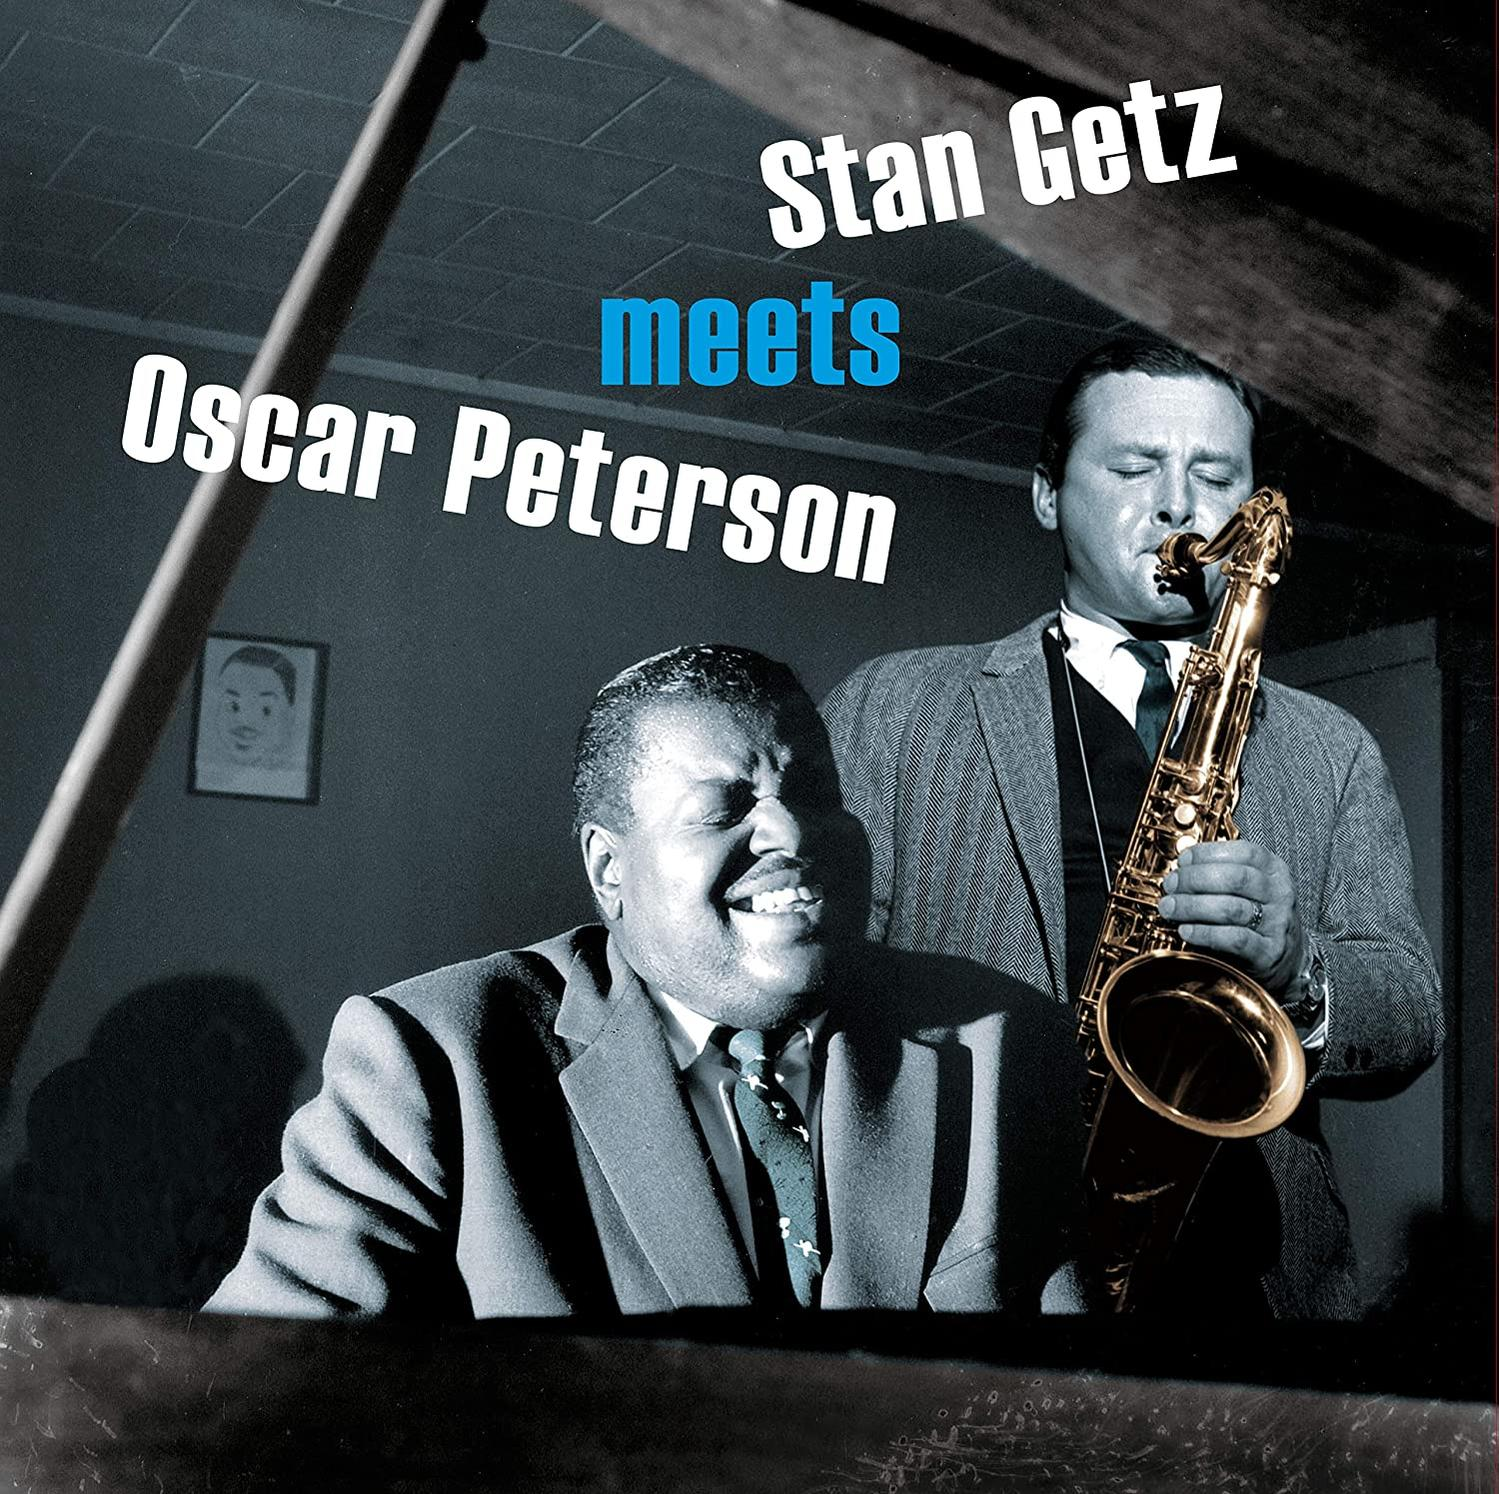 Stan Getz, Oscar (Vinyl) Peterson MEETS STAN PETERSON OSCAR - GETZ 